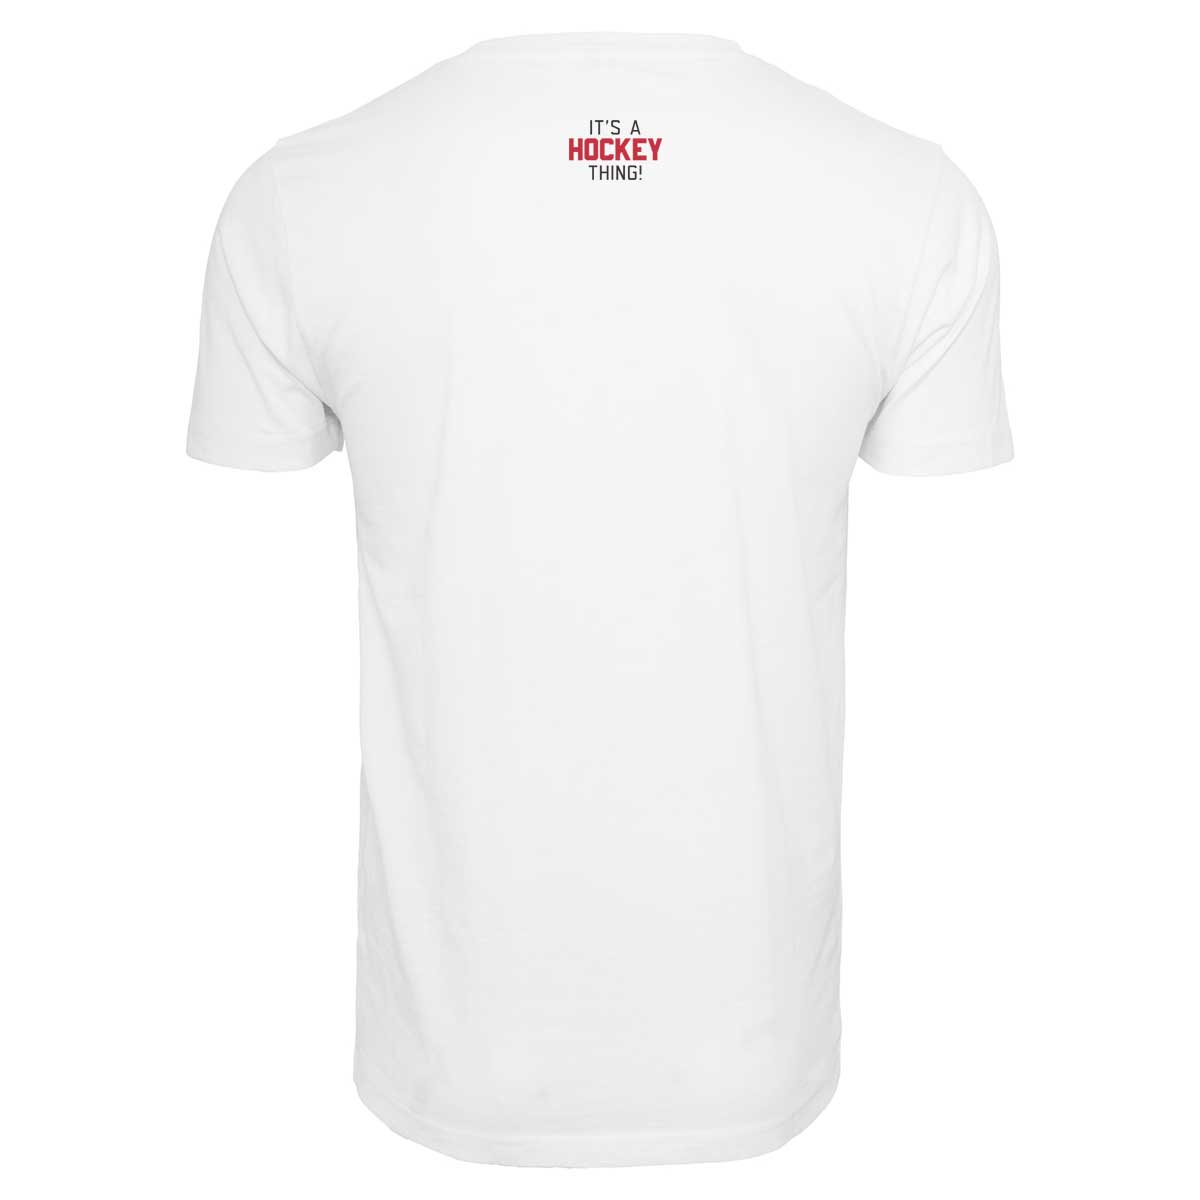 SCALLYWAG® T-Shirt HOCKEY CLUB MEMBER - COR3zilla